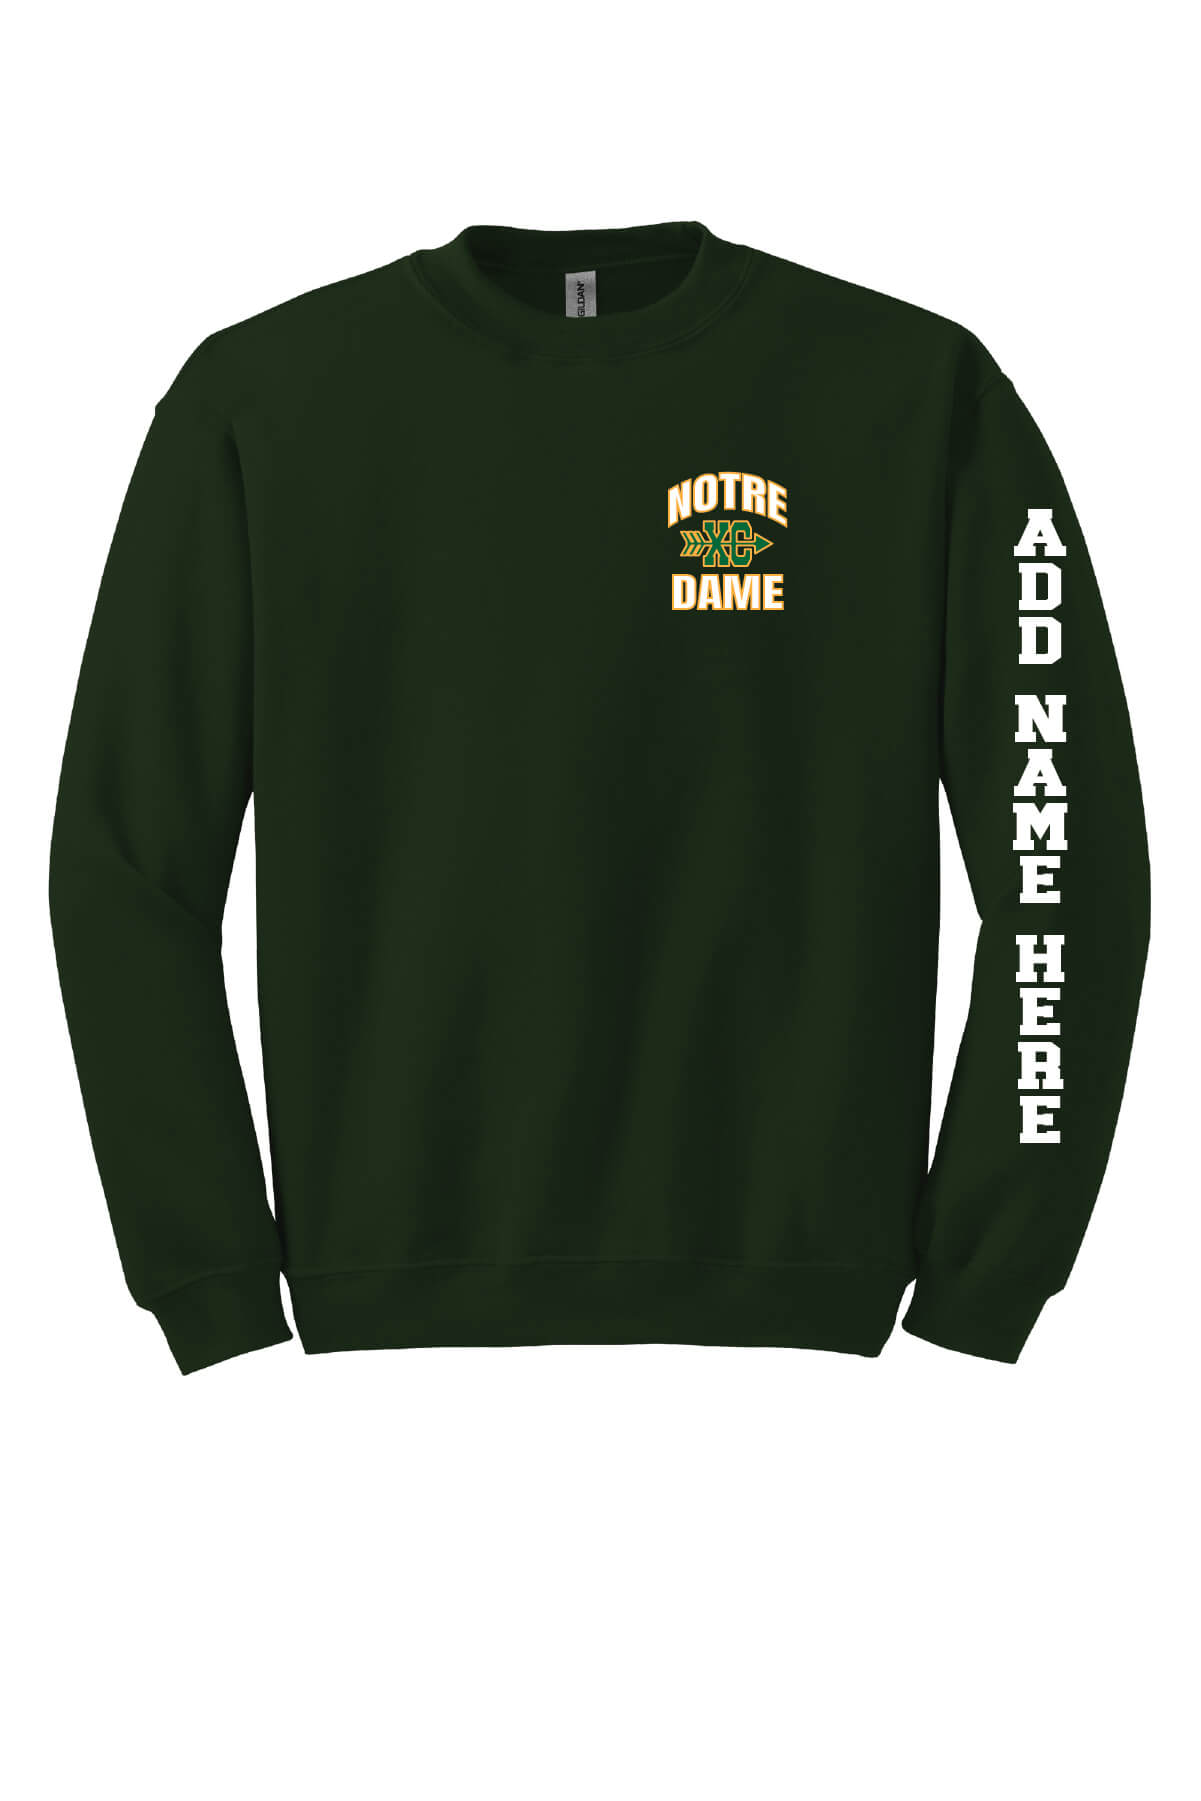 Notre Dame XC Soccer Crewneck Sweatshirt green